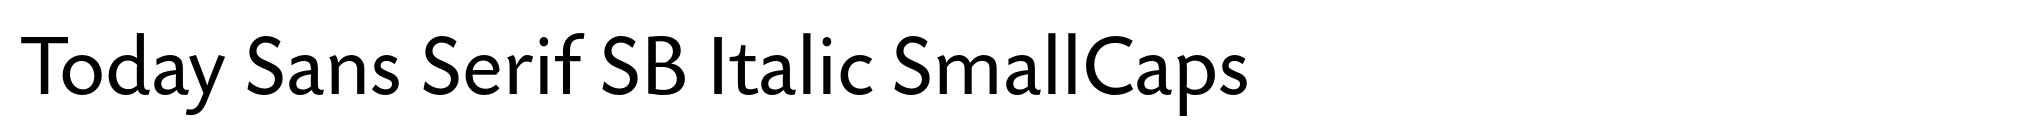 Today Sans Serif SB Italic SmallCaps image